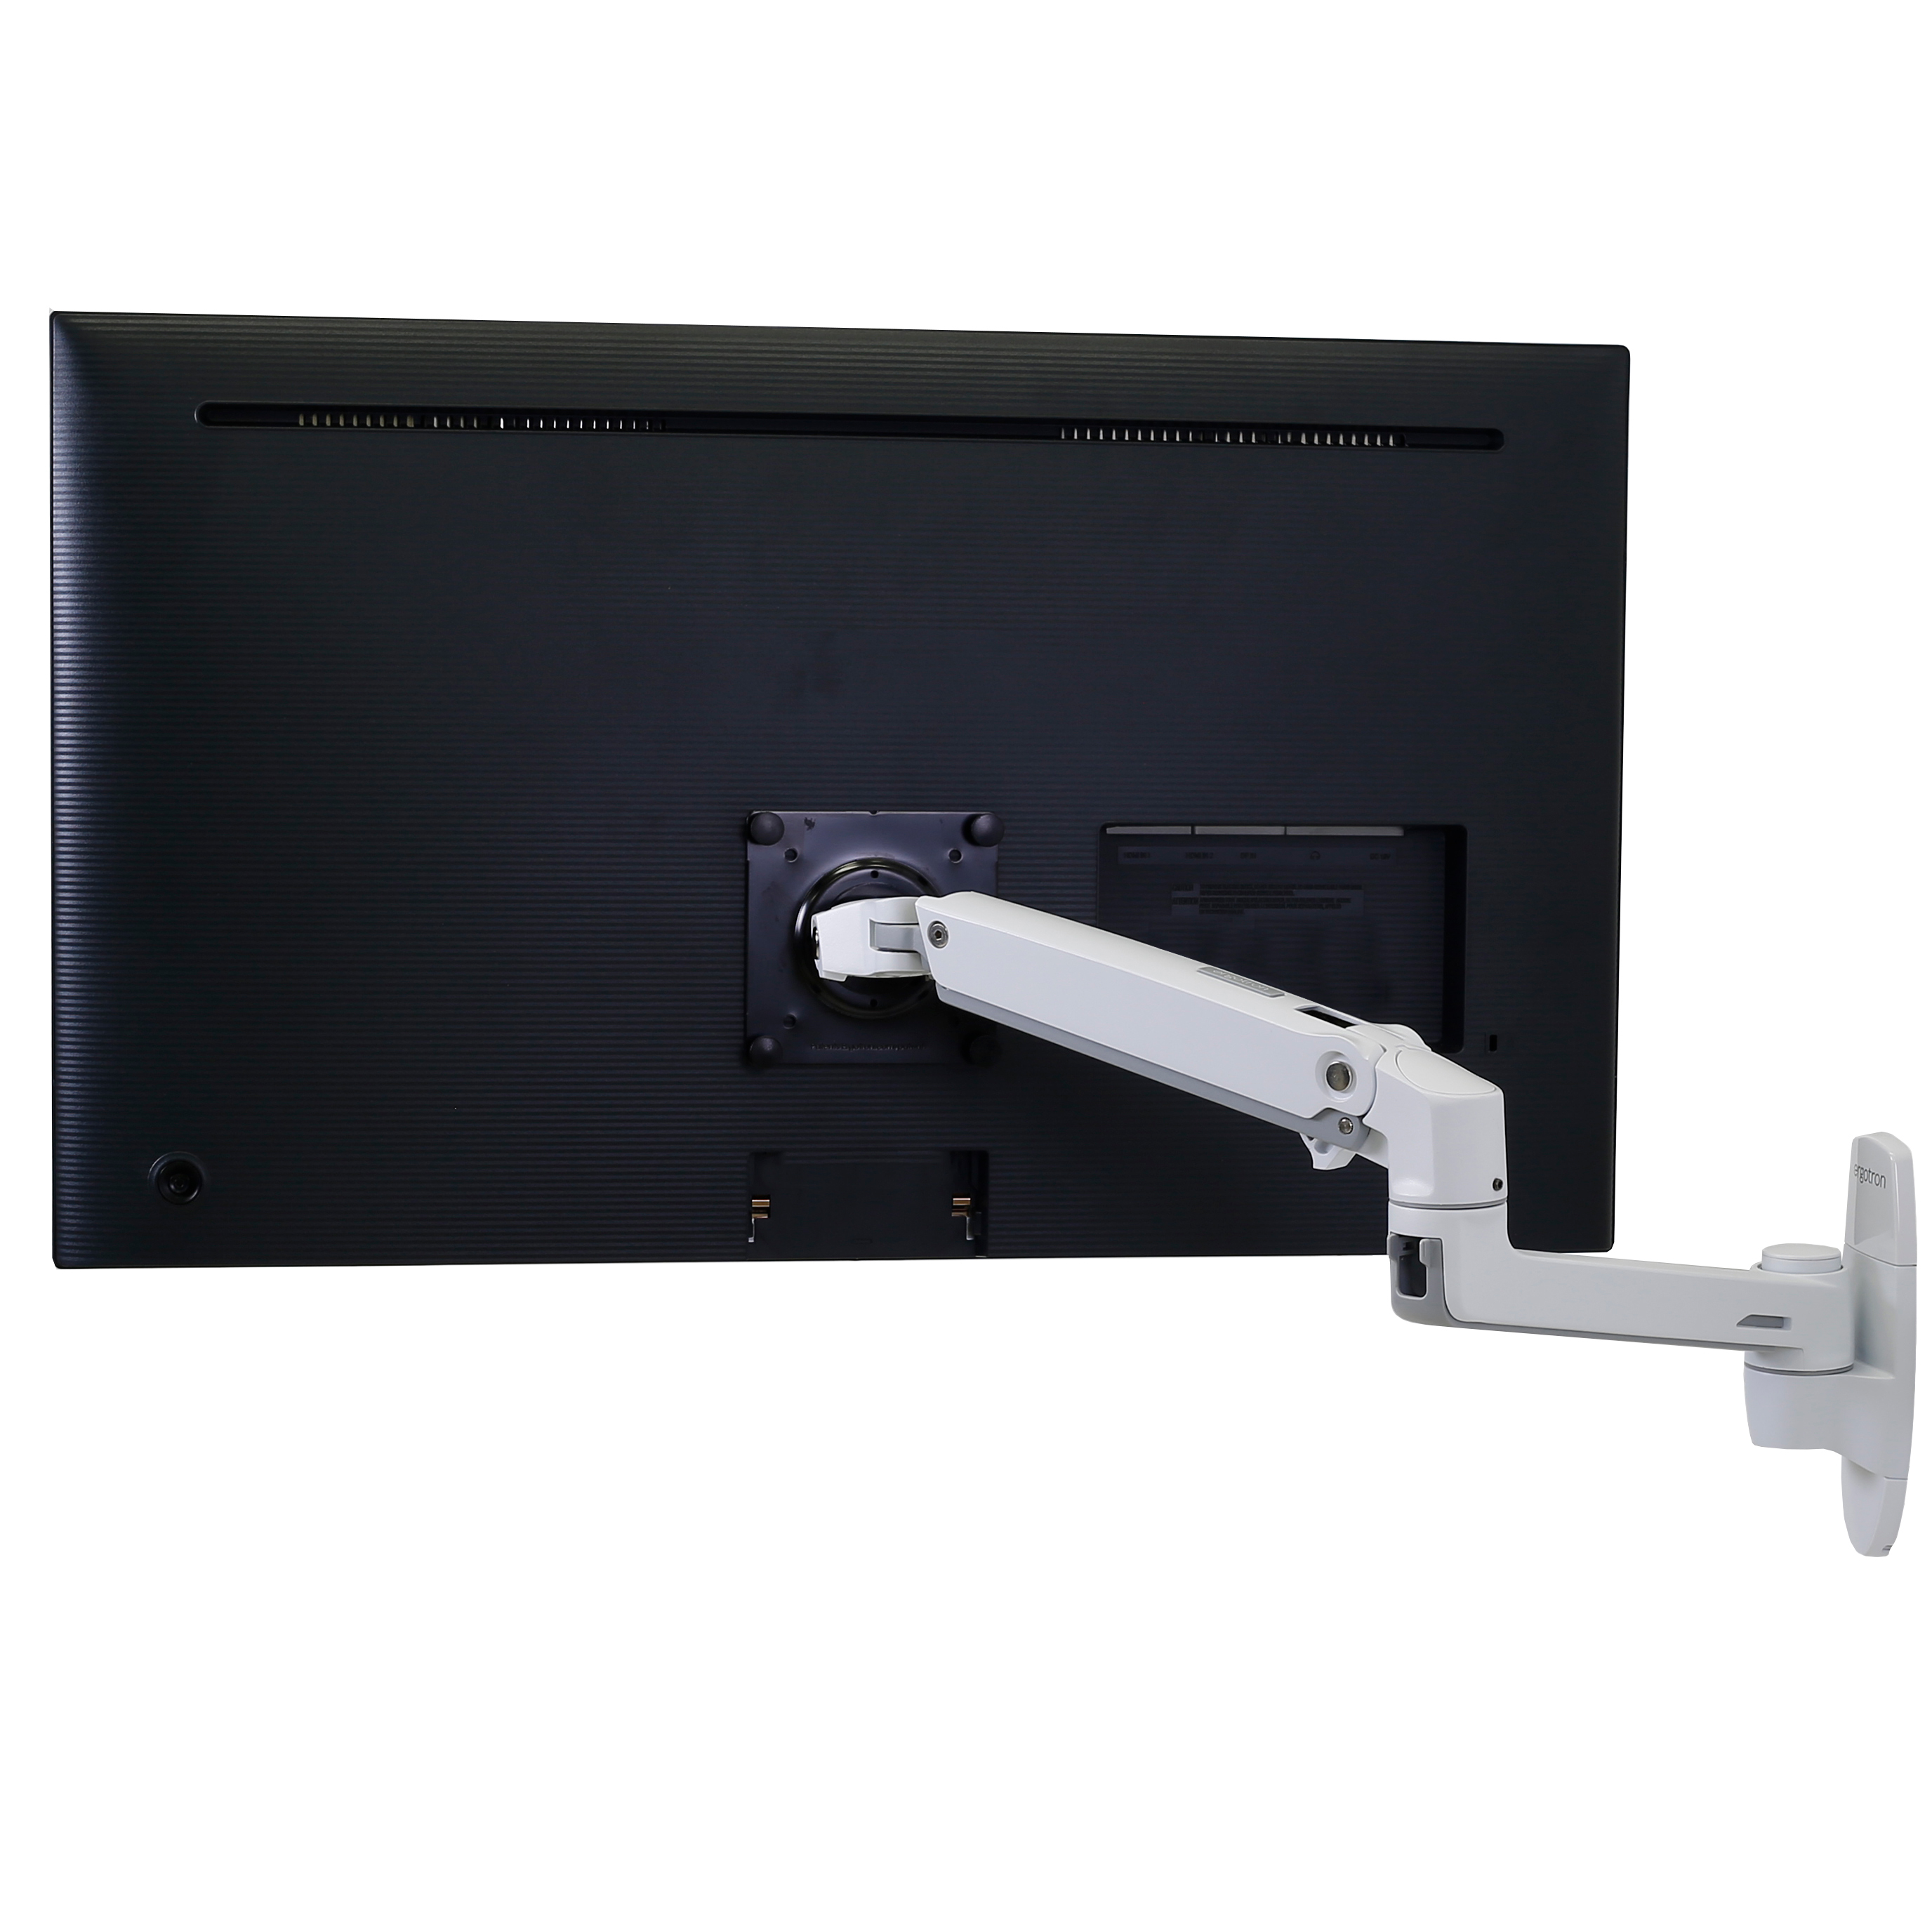 Single Monitor Arm Wall Mount | Ergotron LX Series